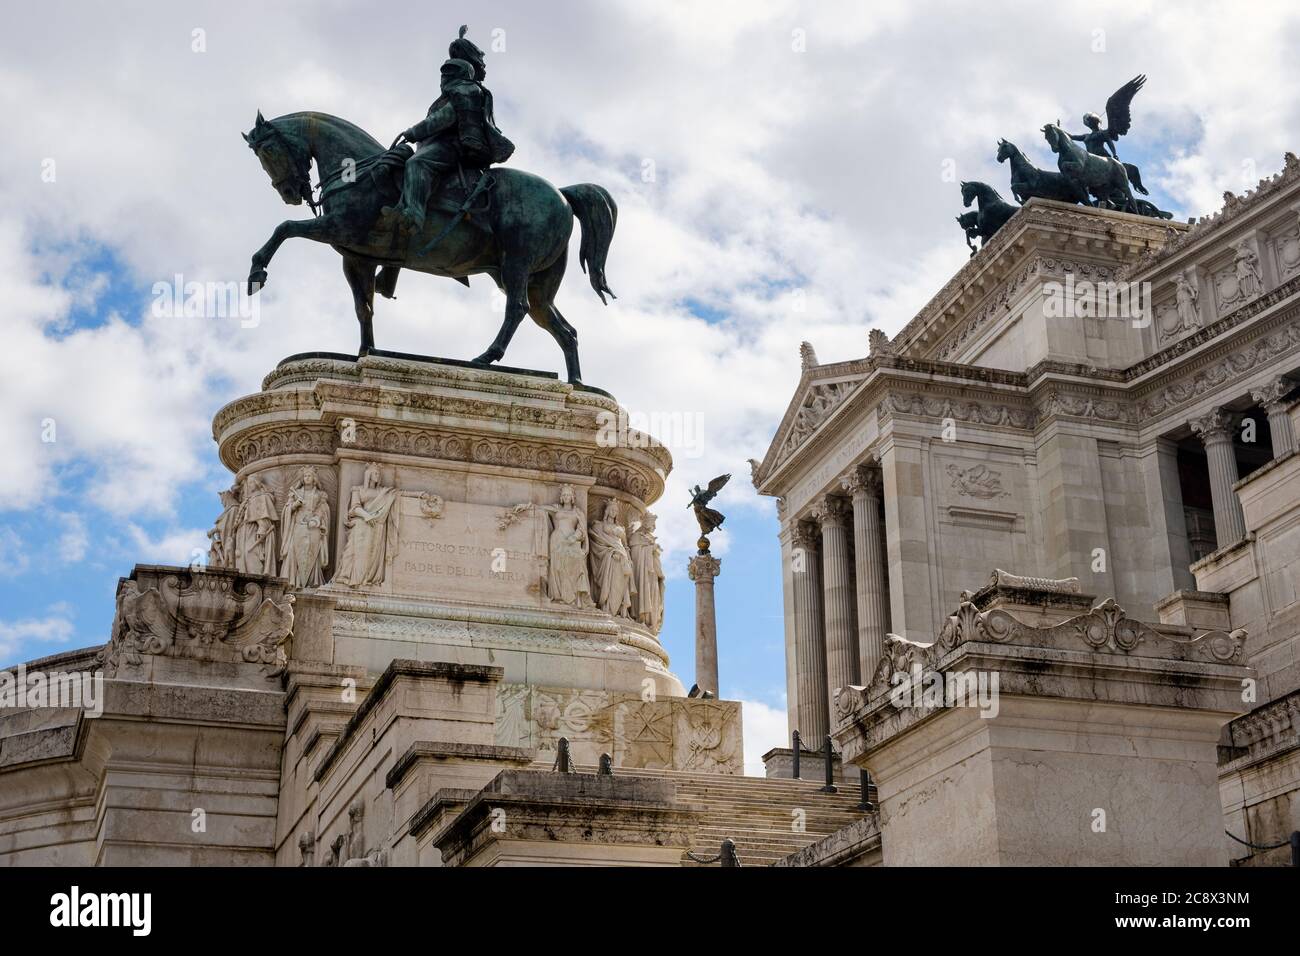 Le monument national Victor Emmanuel II, Piazza Venezia, Rome, Italie Banque D'Images